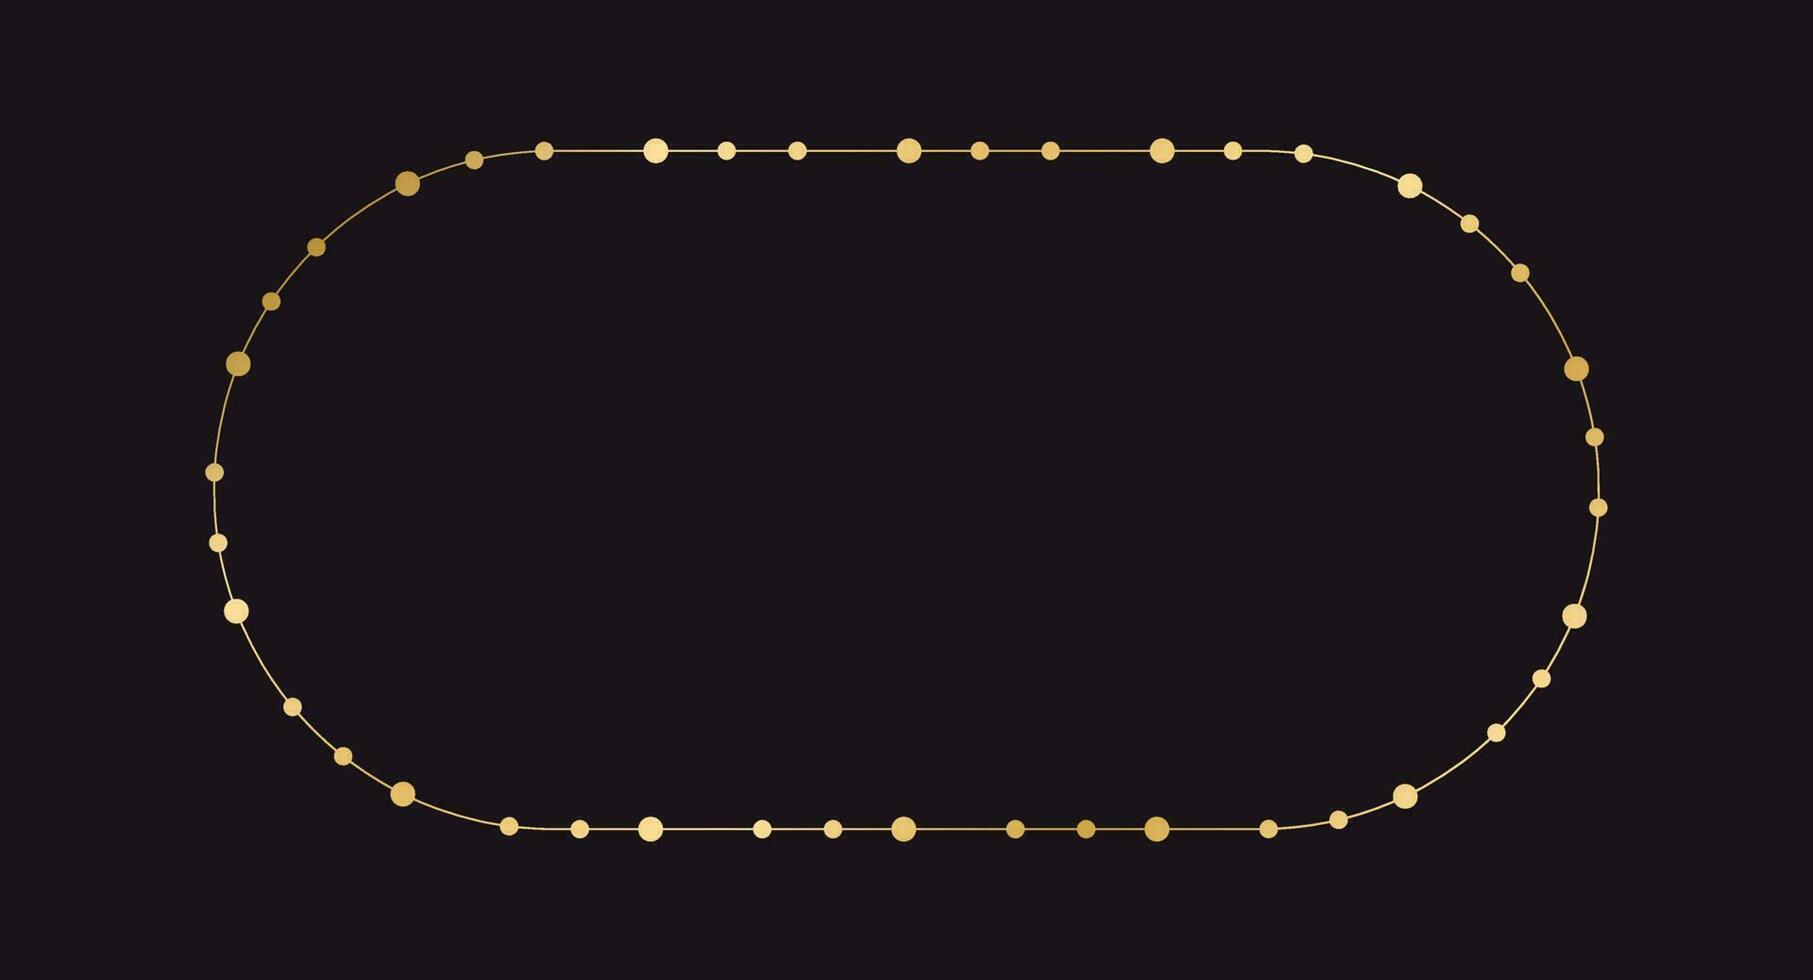 oro Navidad hada luces oval marco frontera modelo. resumen dorado puntos circulo marco. vector